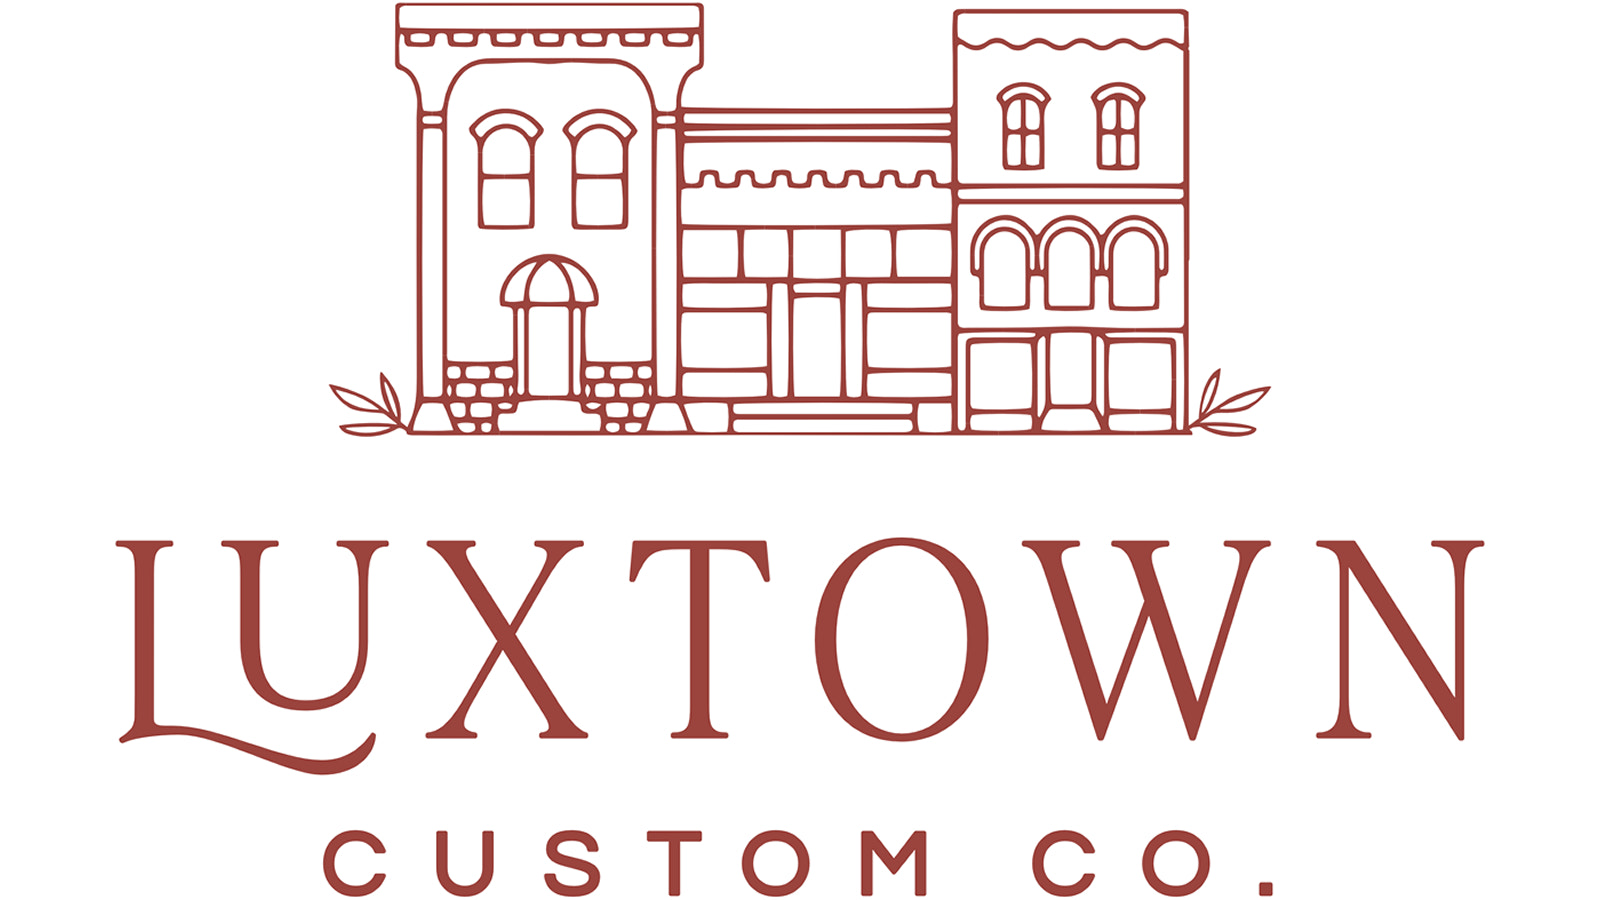 Luxtowns anpassade produkter: små lyxigheter till praktiska priser